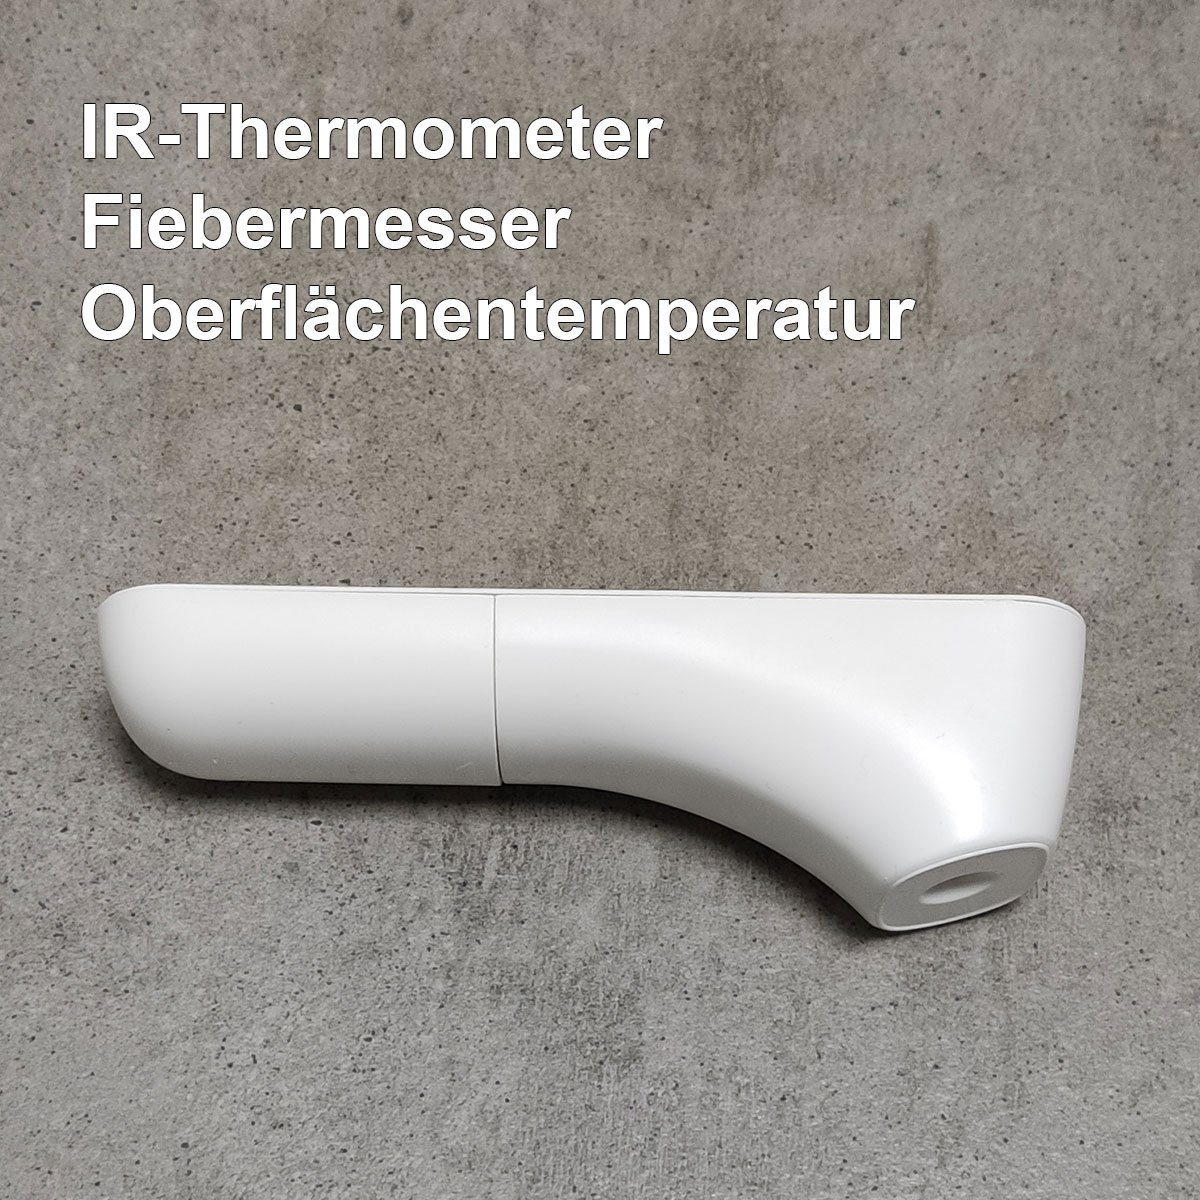 Fieberthermometer Thermometer Forca geeignet IR Infrarot, Altersgruppen alle 1-tlg., Temperaturmessung Für Infrarot-Fieberthermometer